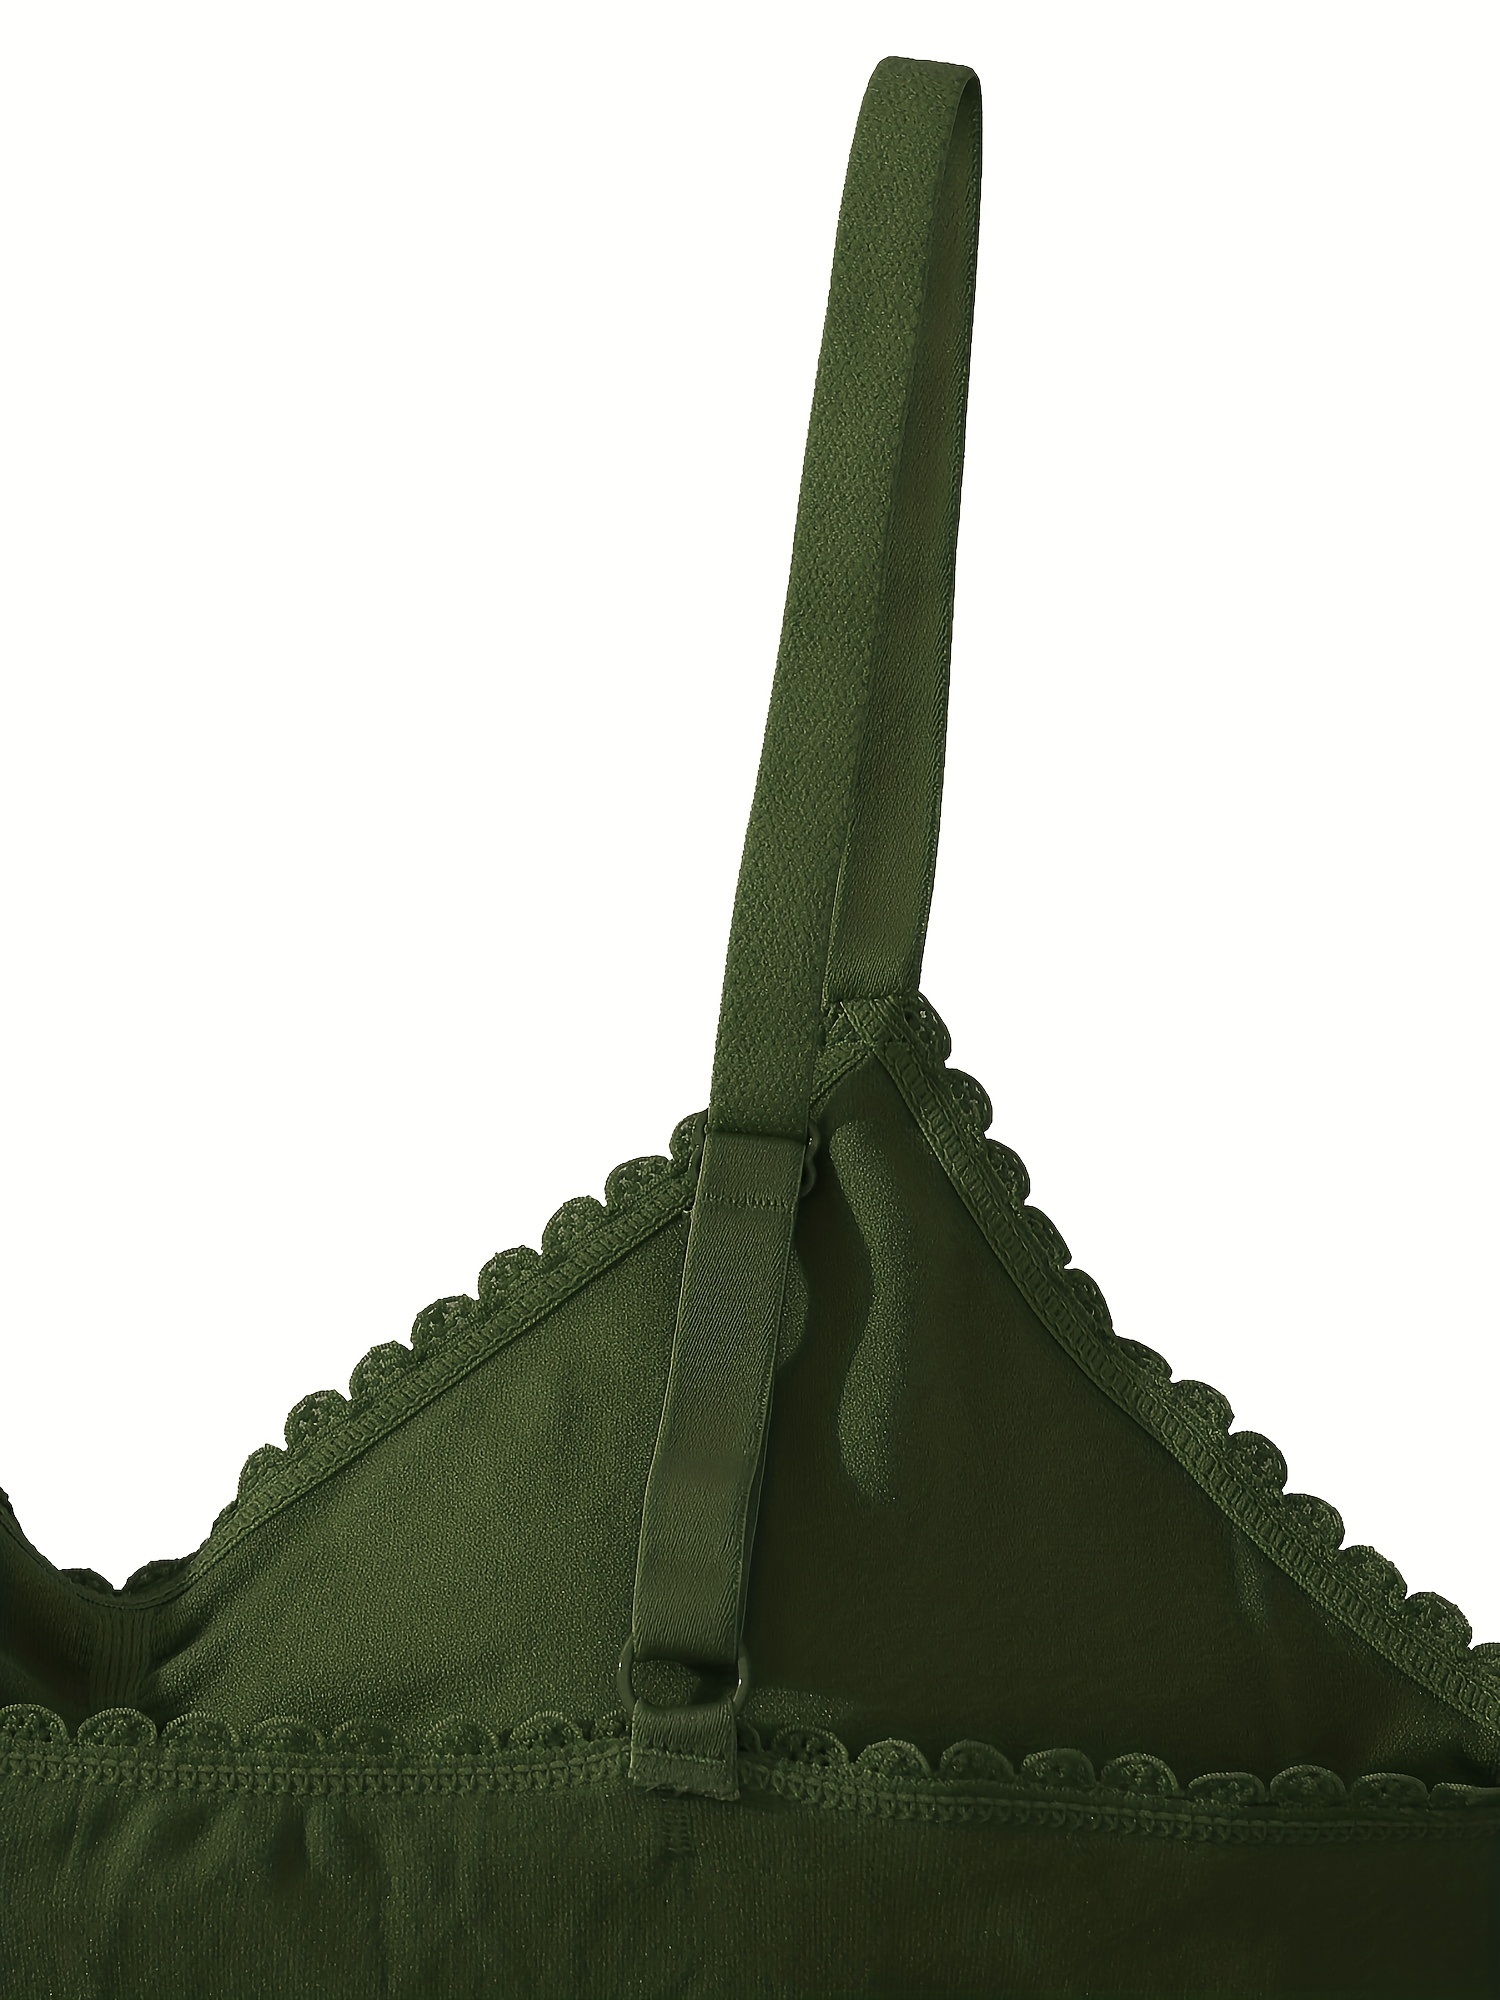 njshnmn Bras For Women Plus Size Wireless Padded Bra with Adjustable Straps  for Women Girls, Green, L 